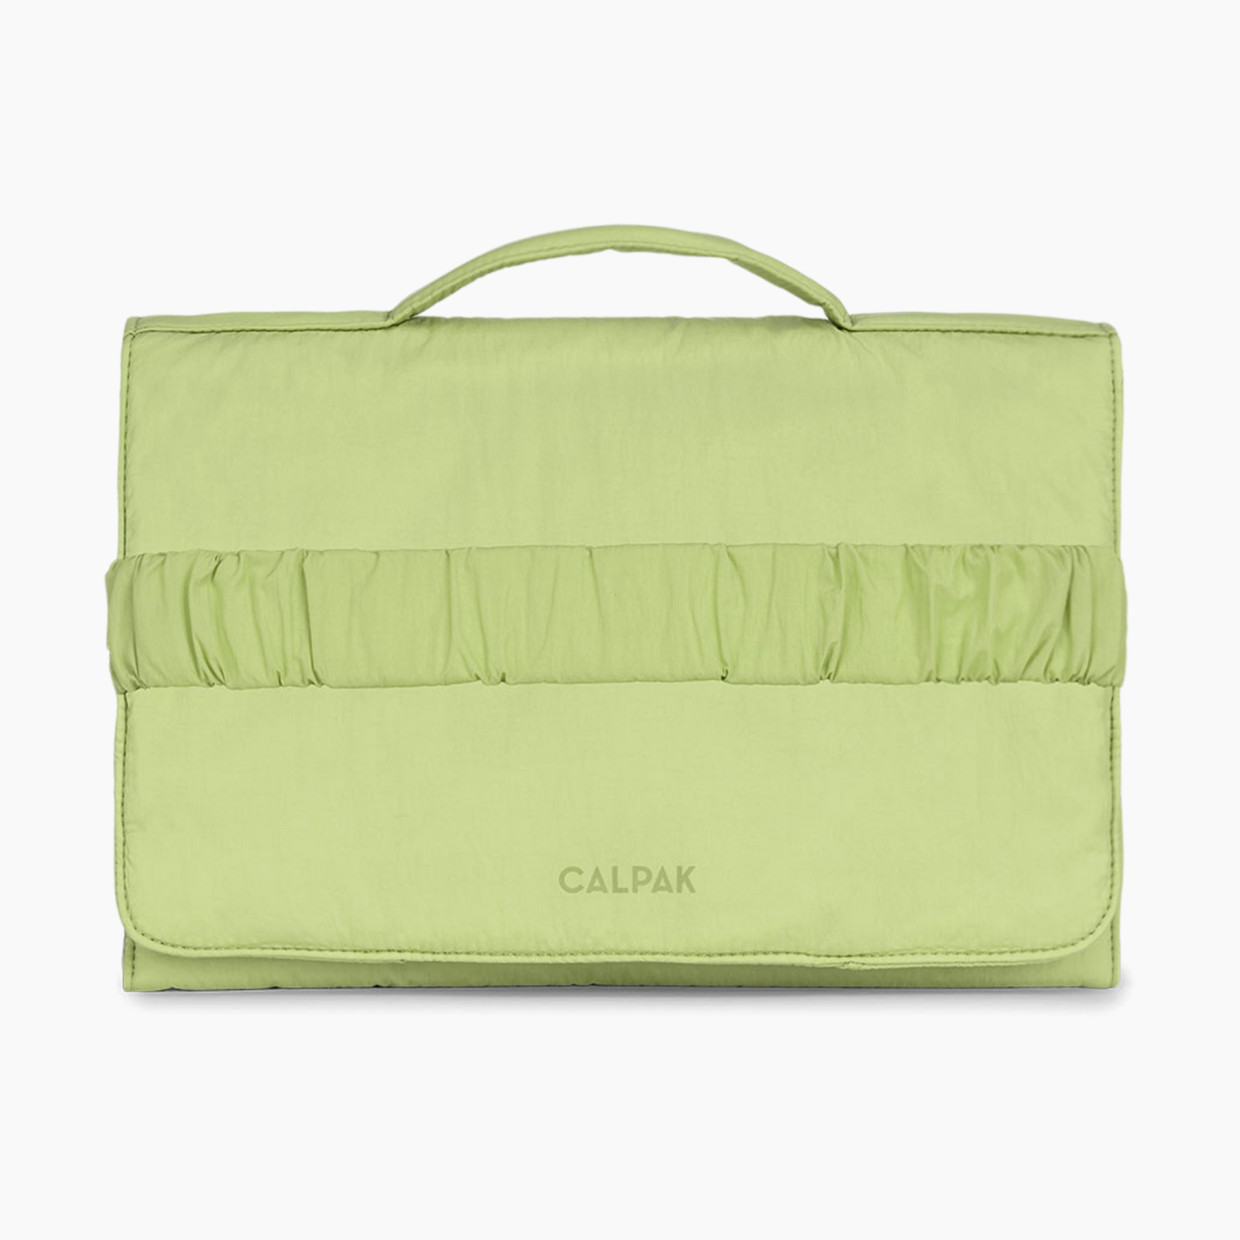 CALPAK Portable Changing Pad Clutch - Lime.